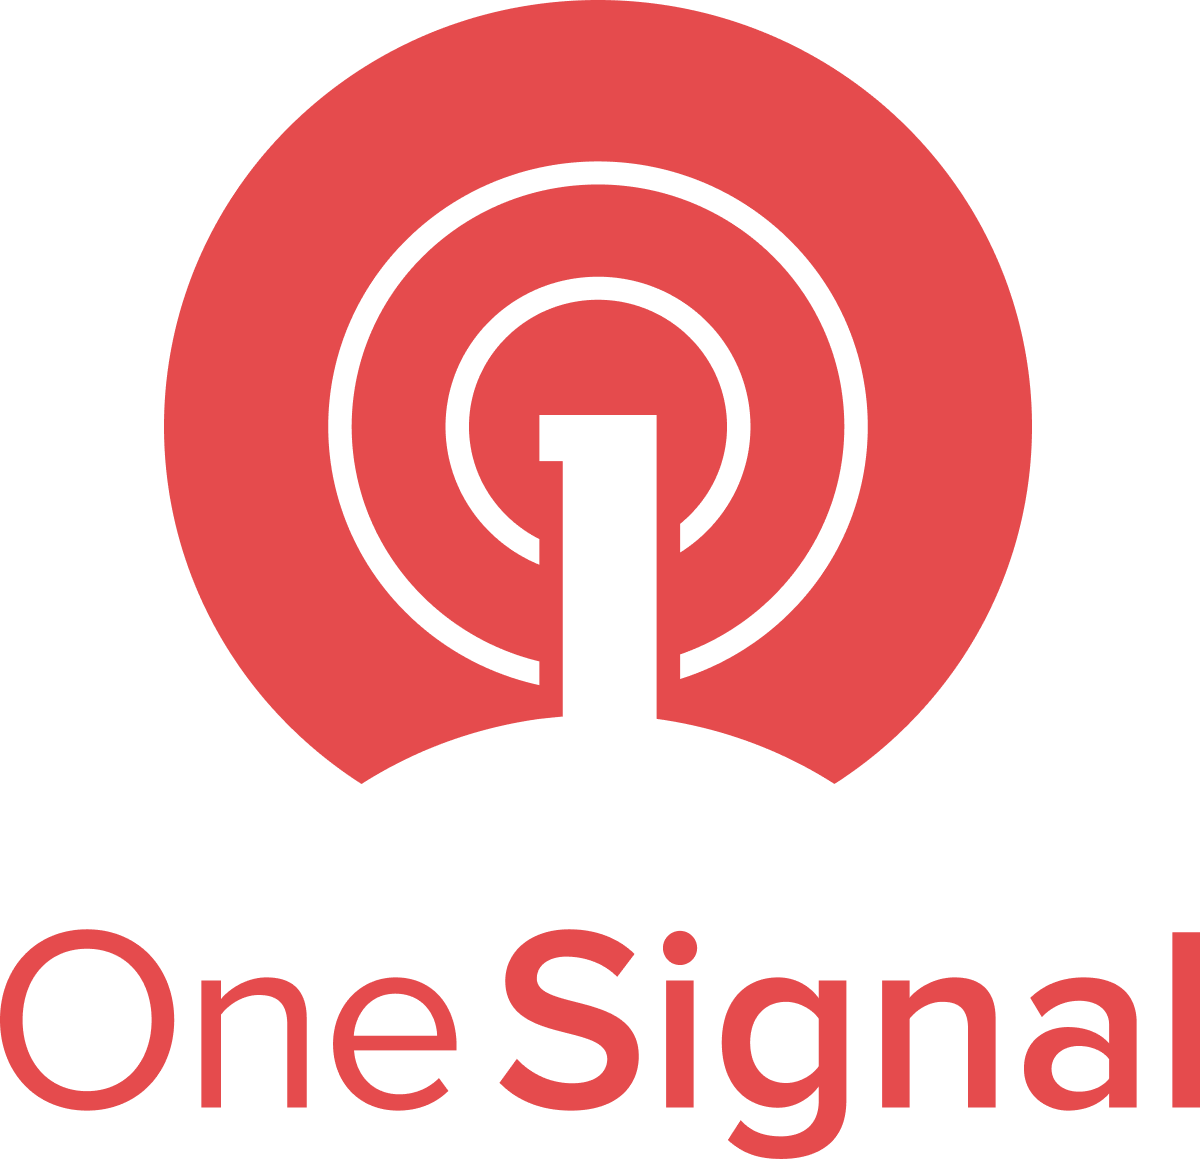 onesignal logo sqare